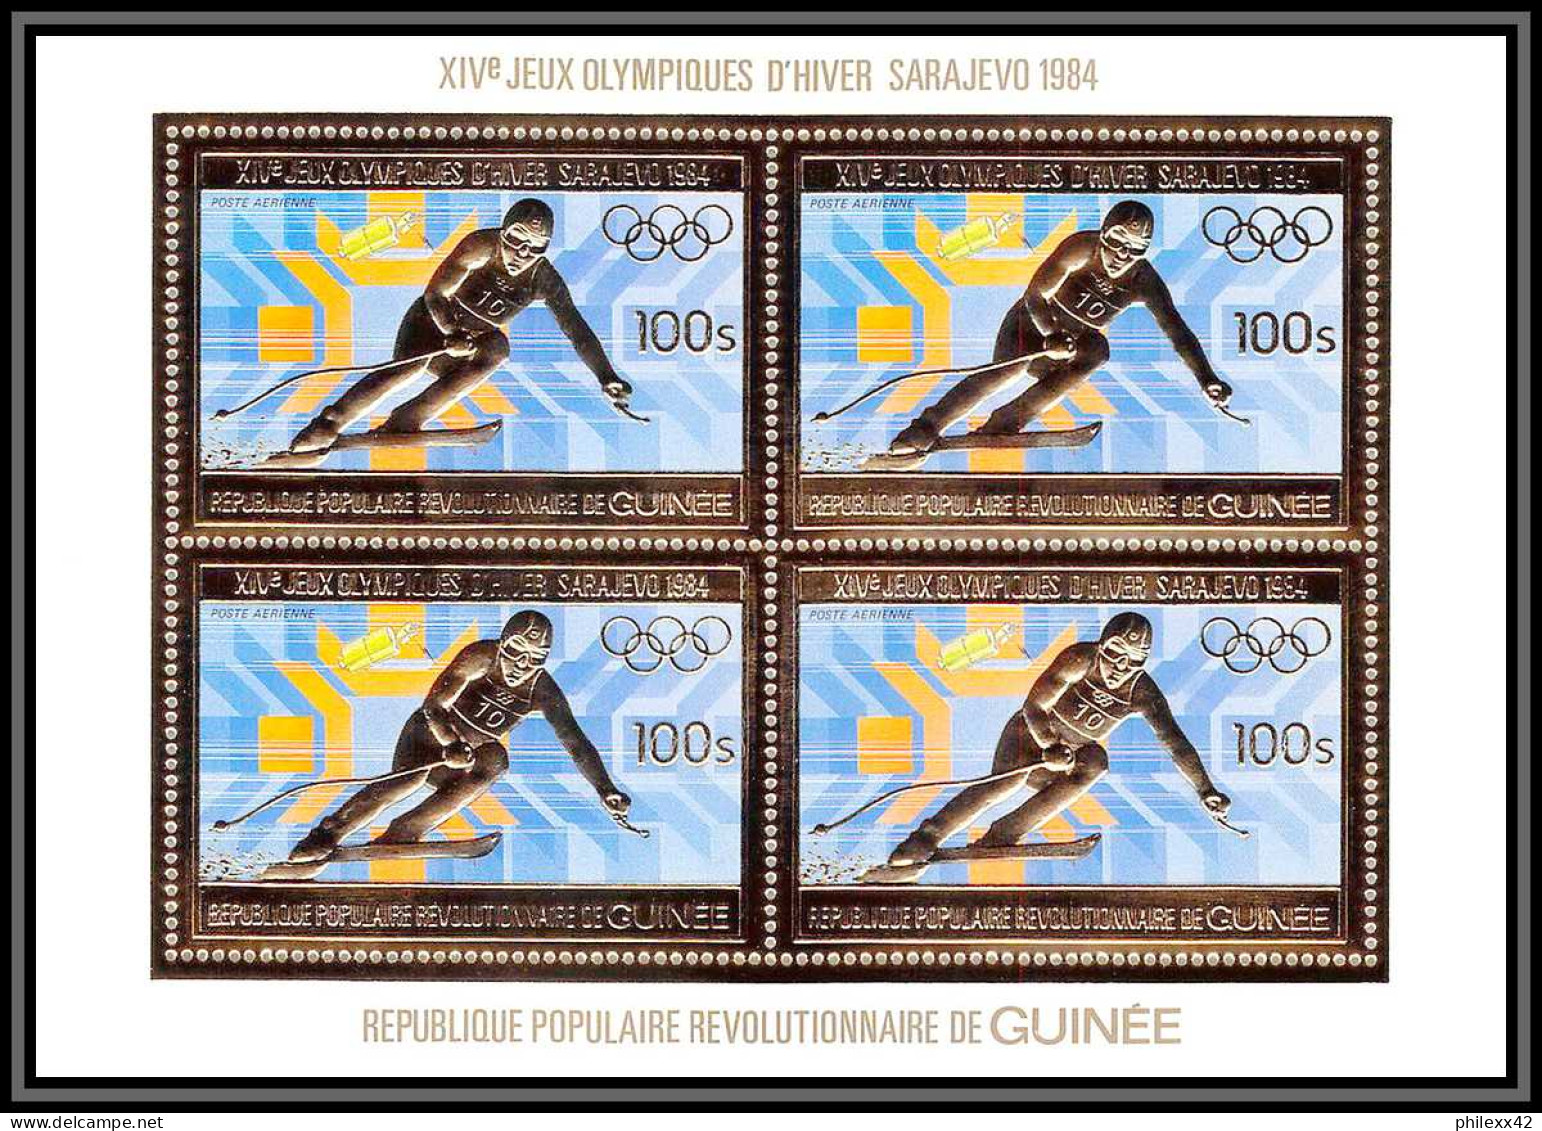 85830/ N°971 A Sarajevo SKI 1984 Jeux Olympiques Olympic Games Guinée Guinea OR Gold Stamps ** MNH Bloc 4 - Winter 1984: Sarajevo